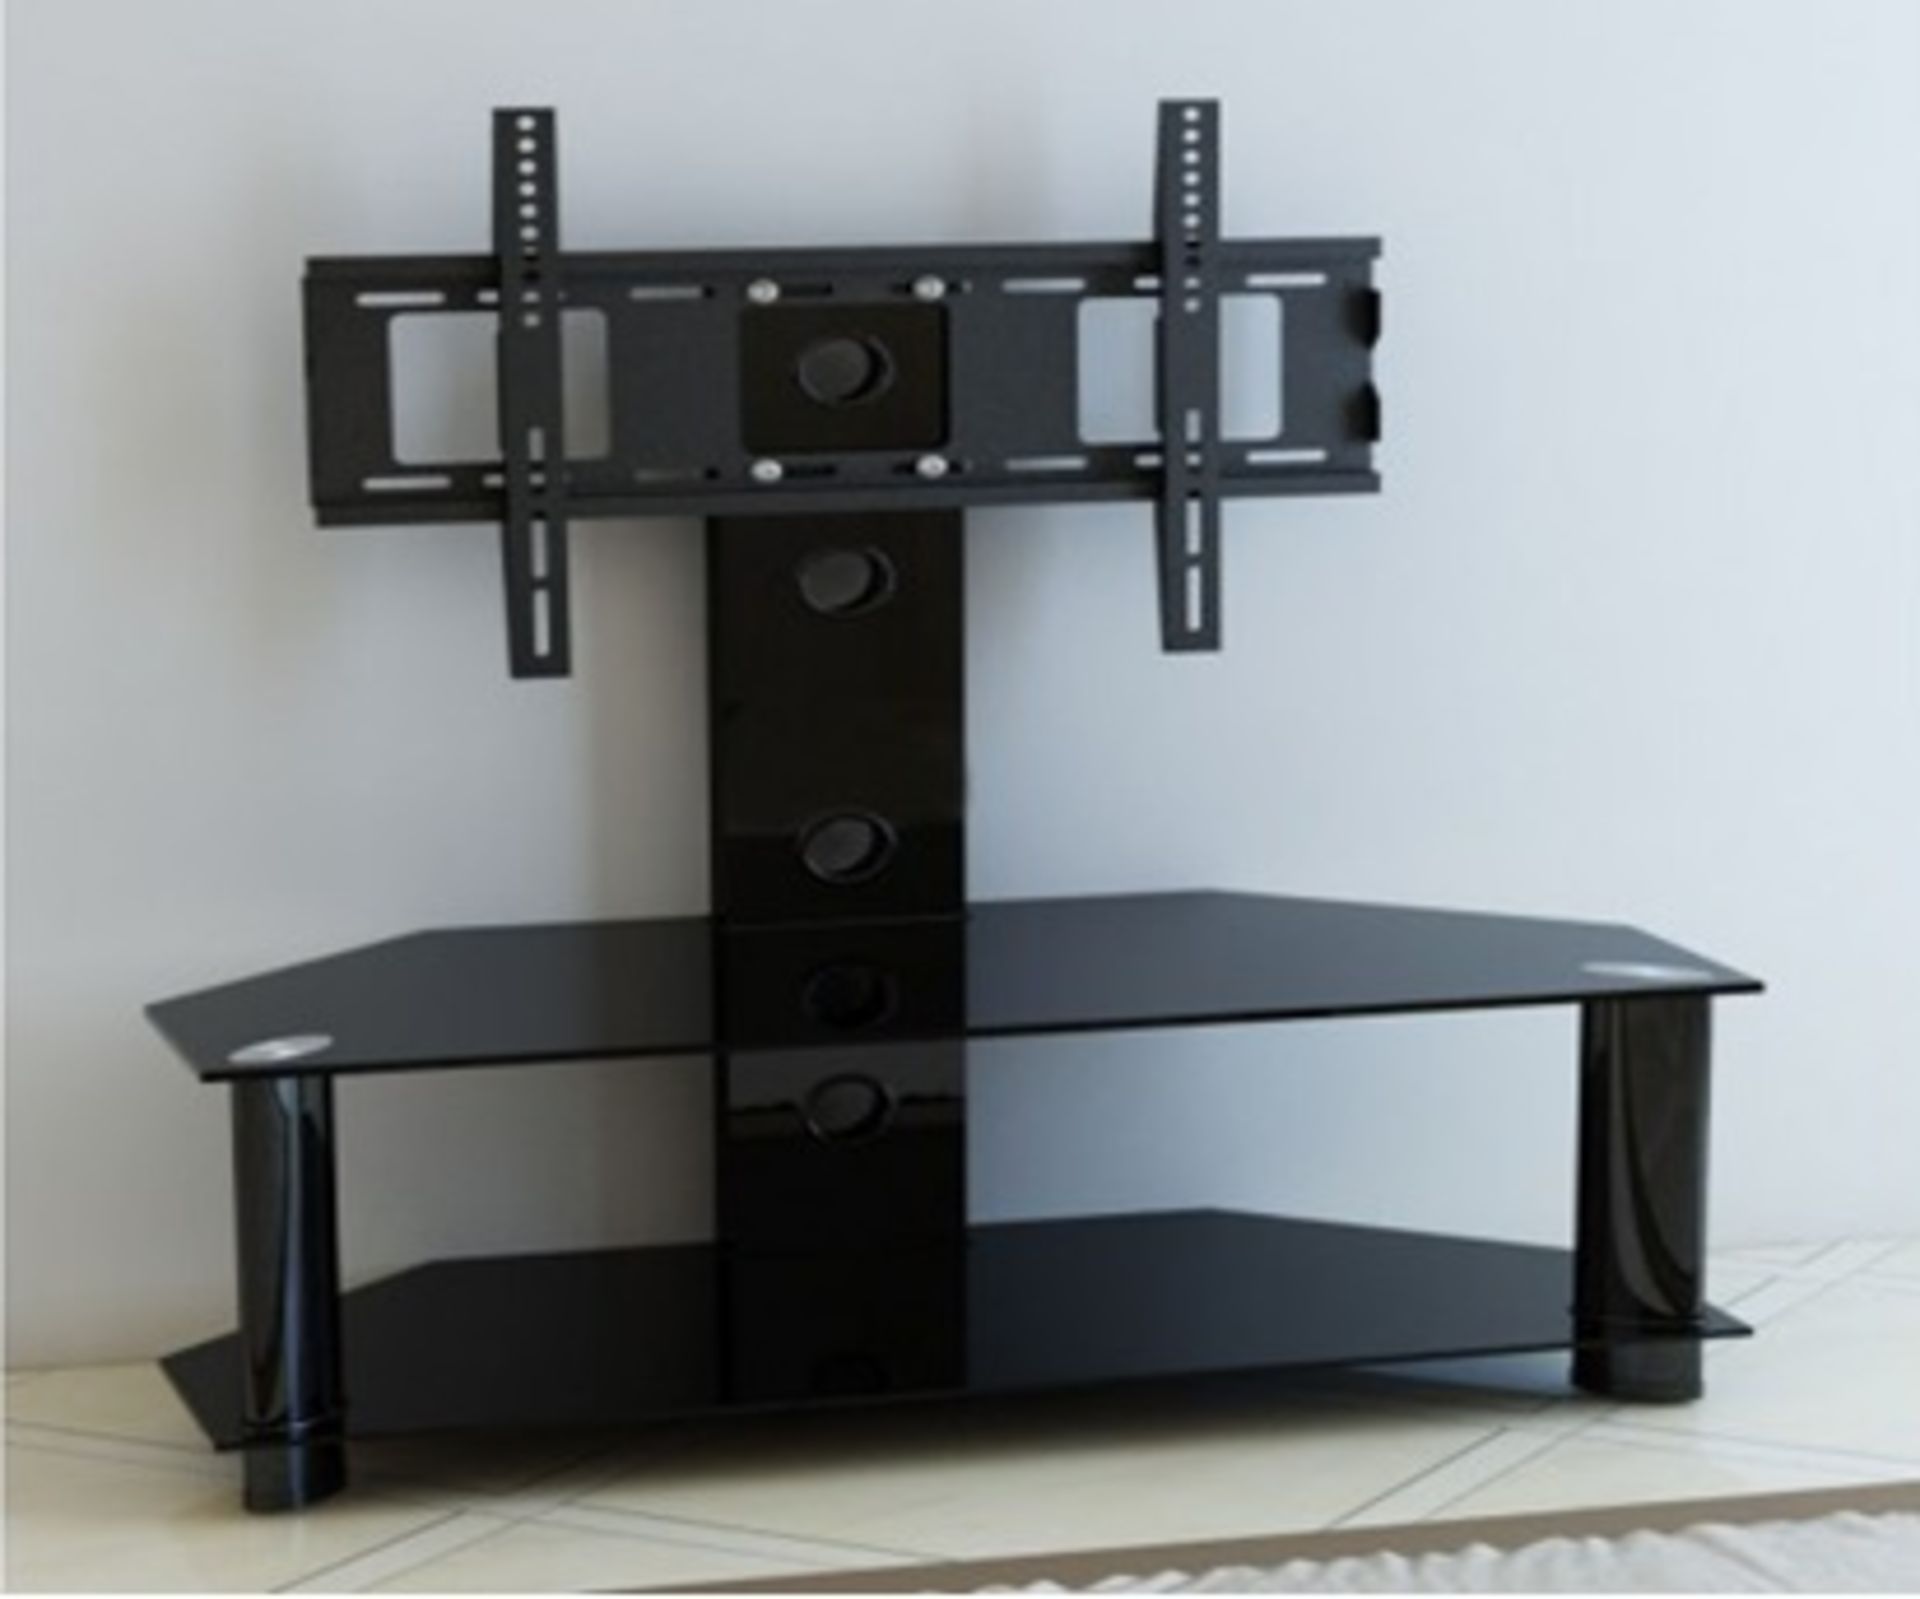 1 x Black Glass TV Stand TVS337 (Brand New & Boxed)